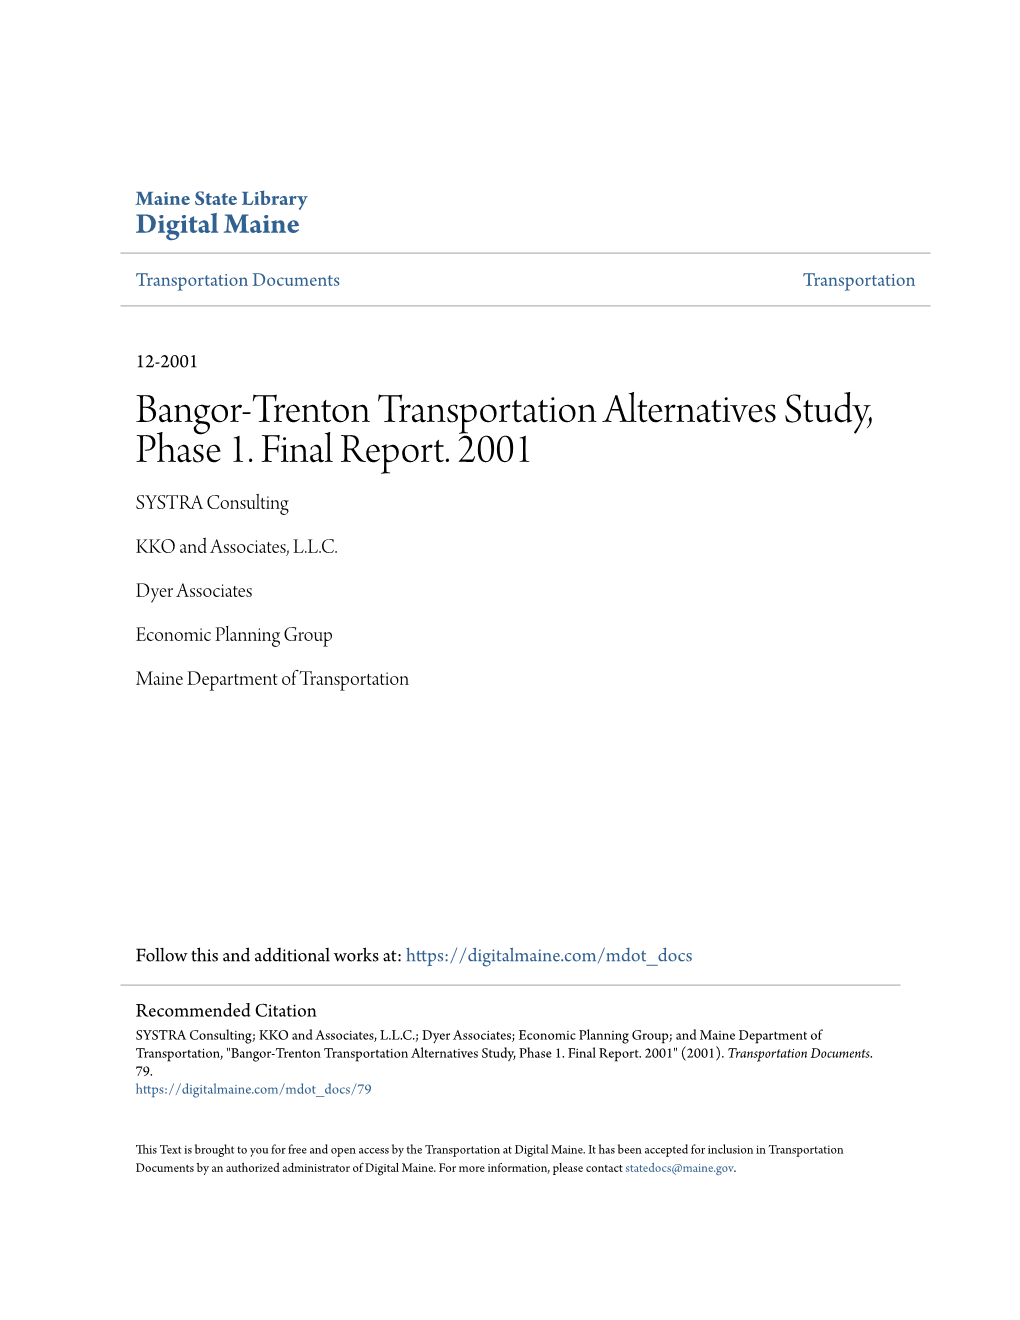 Bangor-Trenton Transportation Alternatives Study, Phase 1. Final Report. 2001 SYSTRA Onsc Ulting